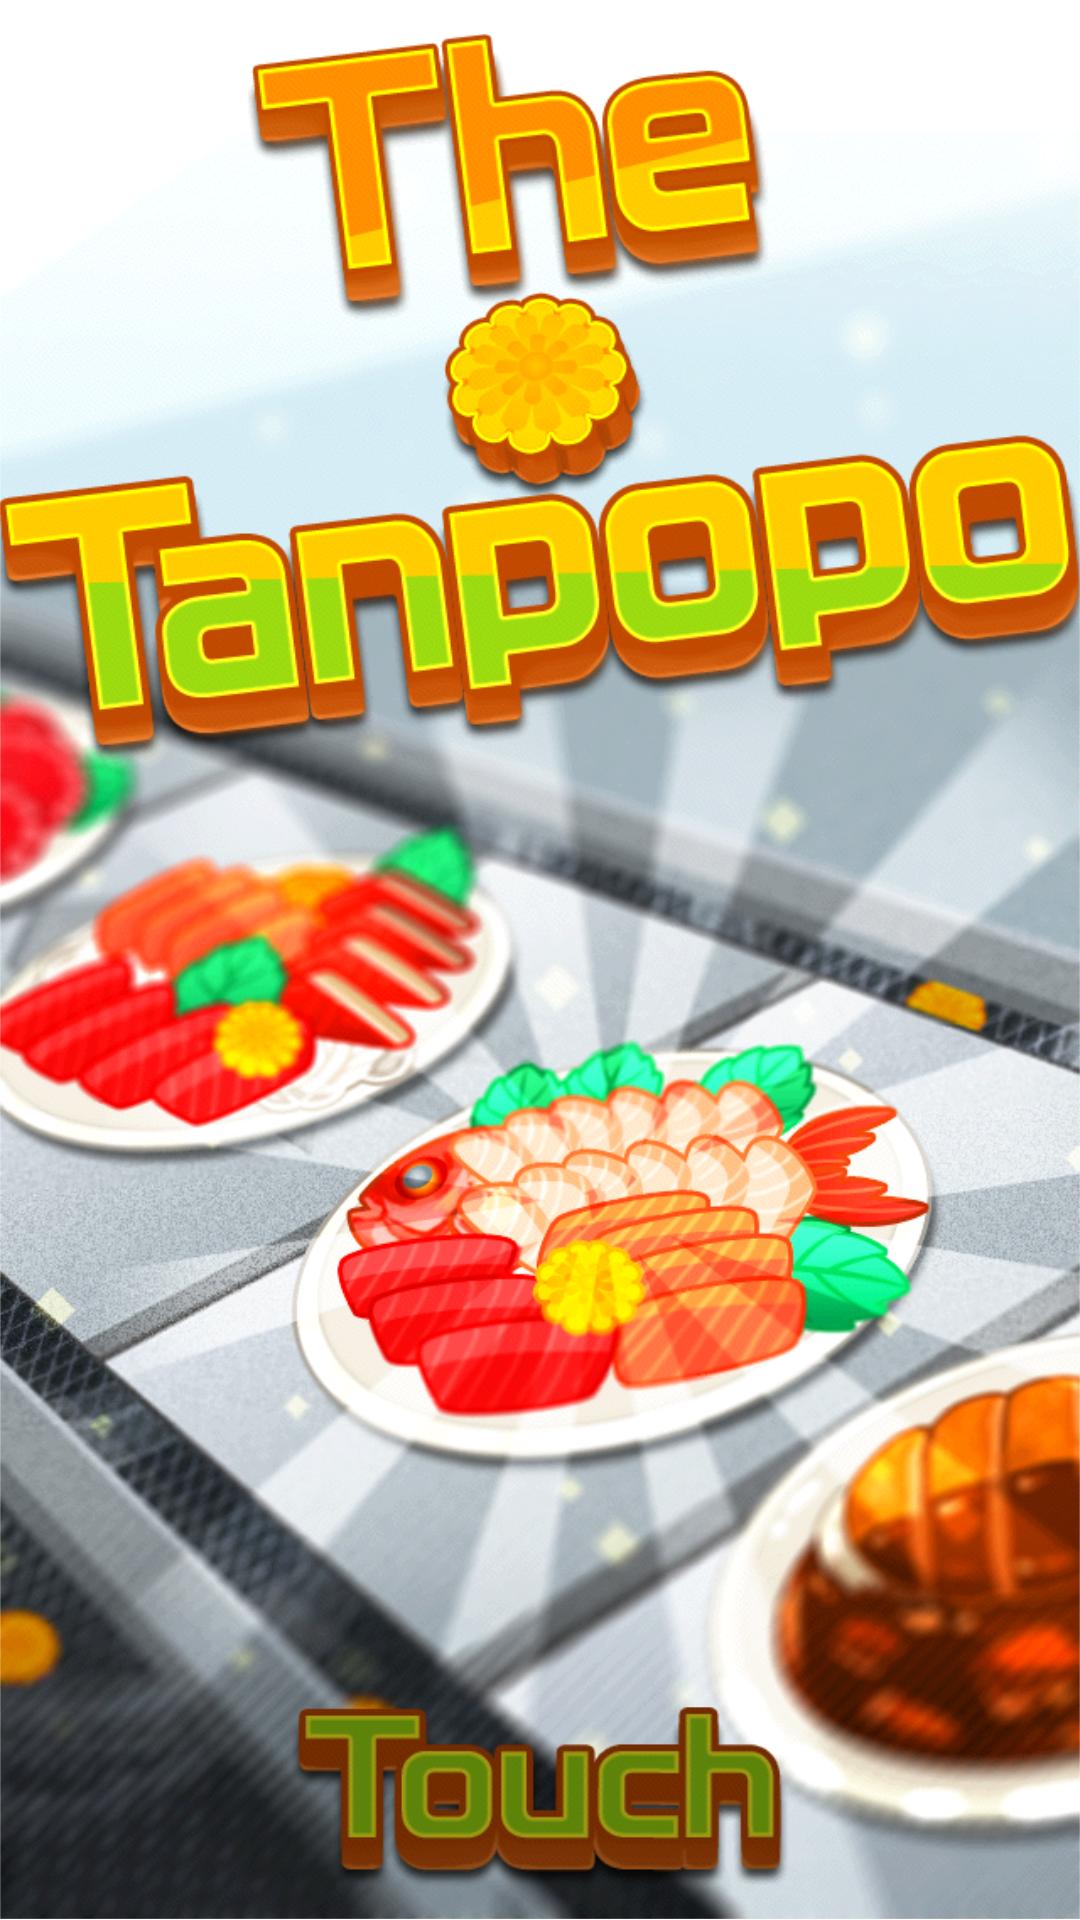 The Tanpopo